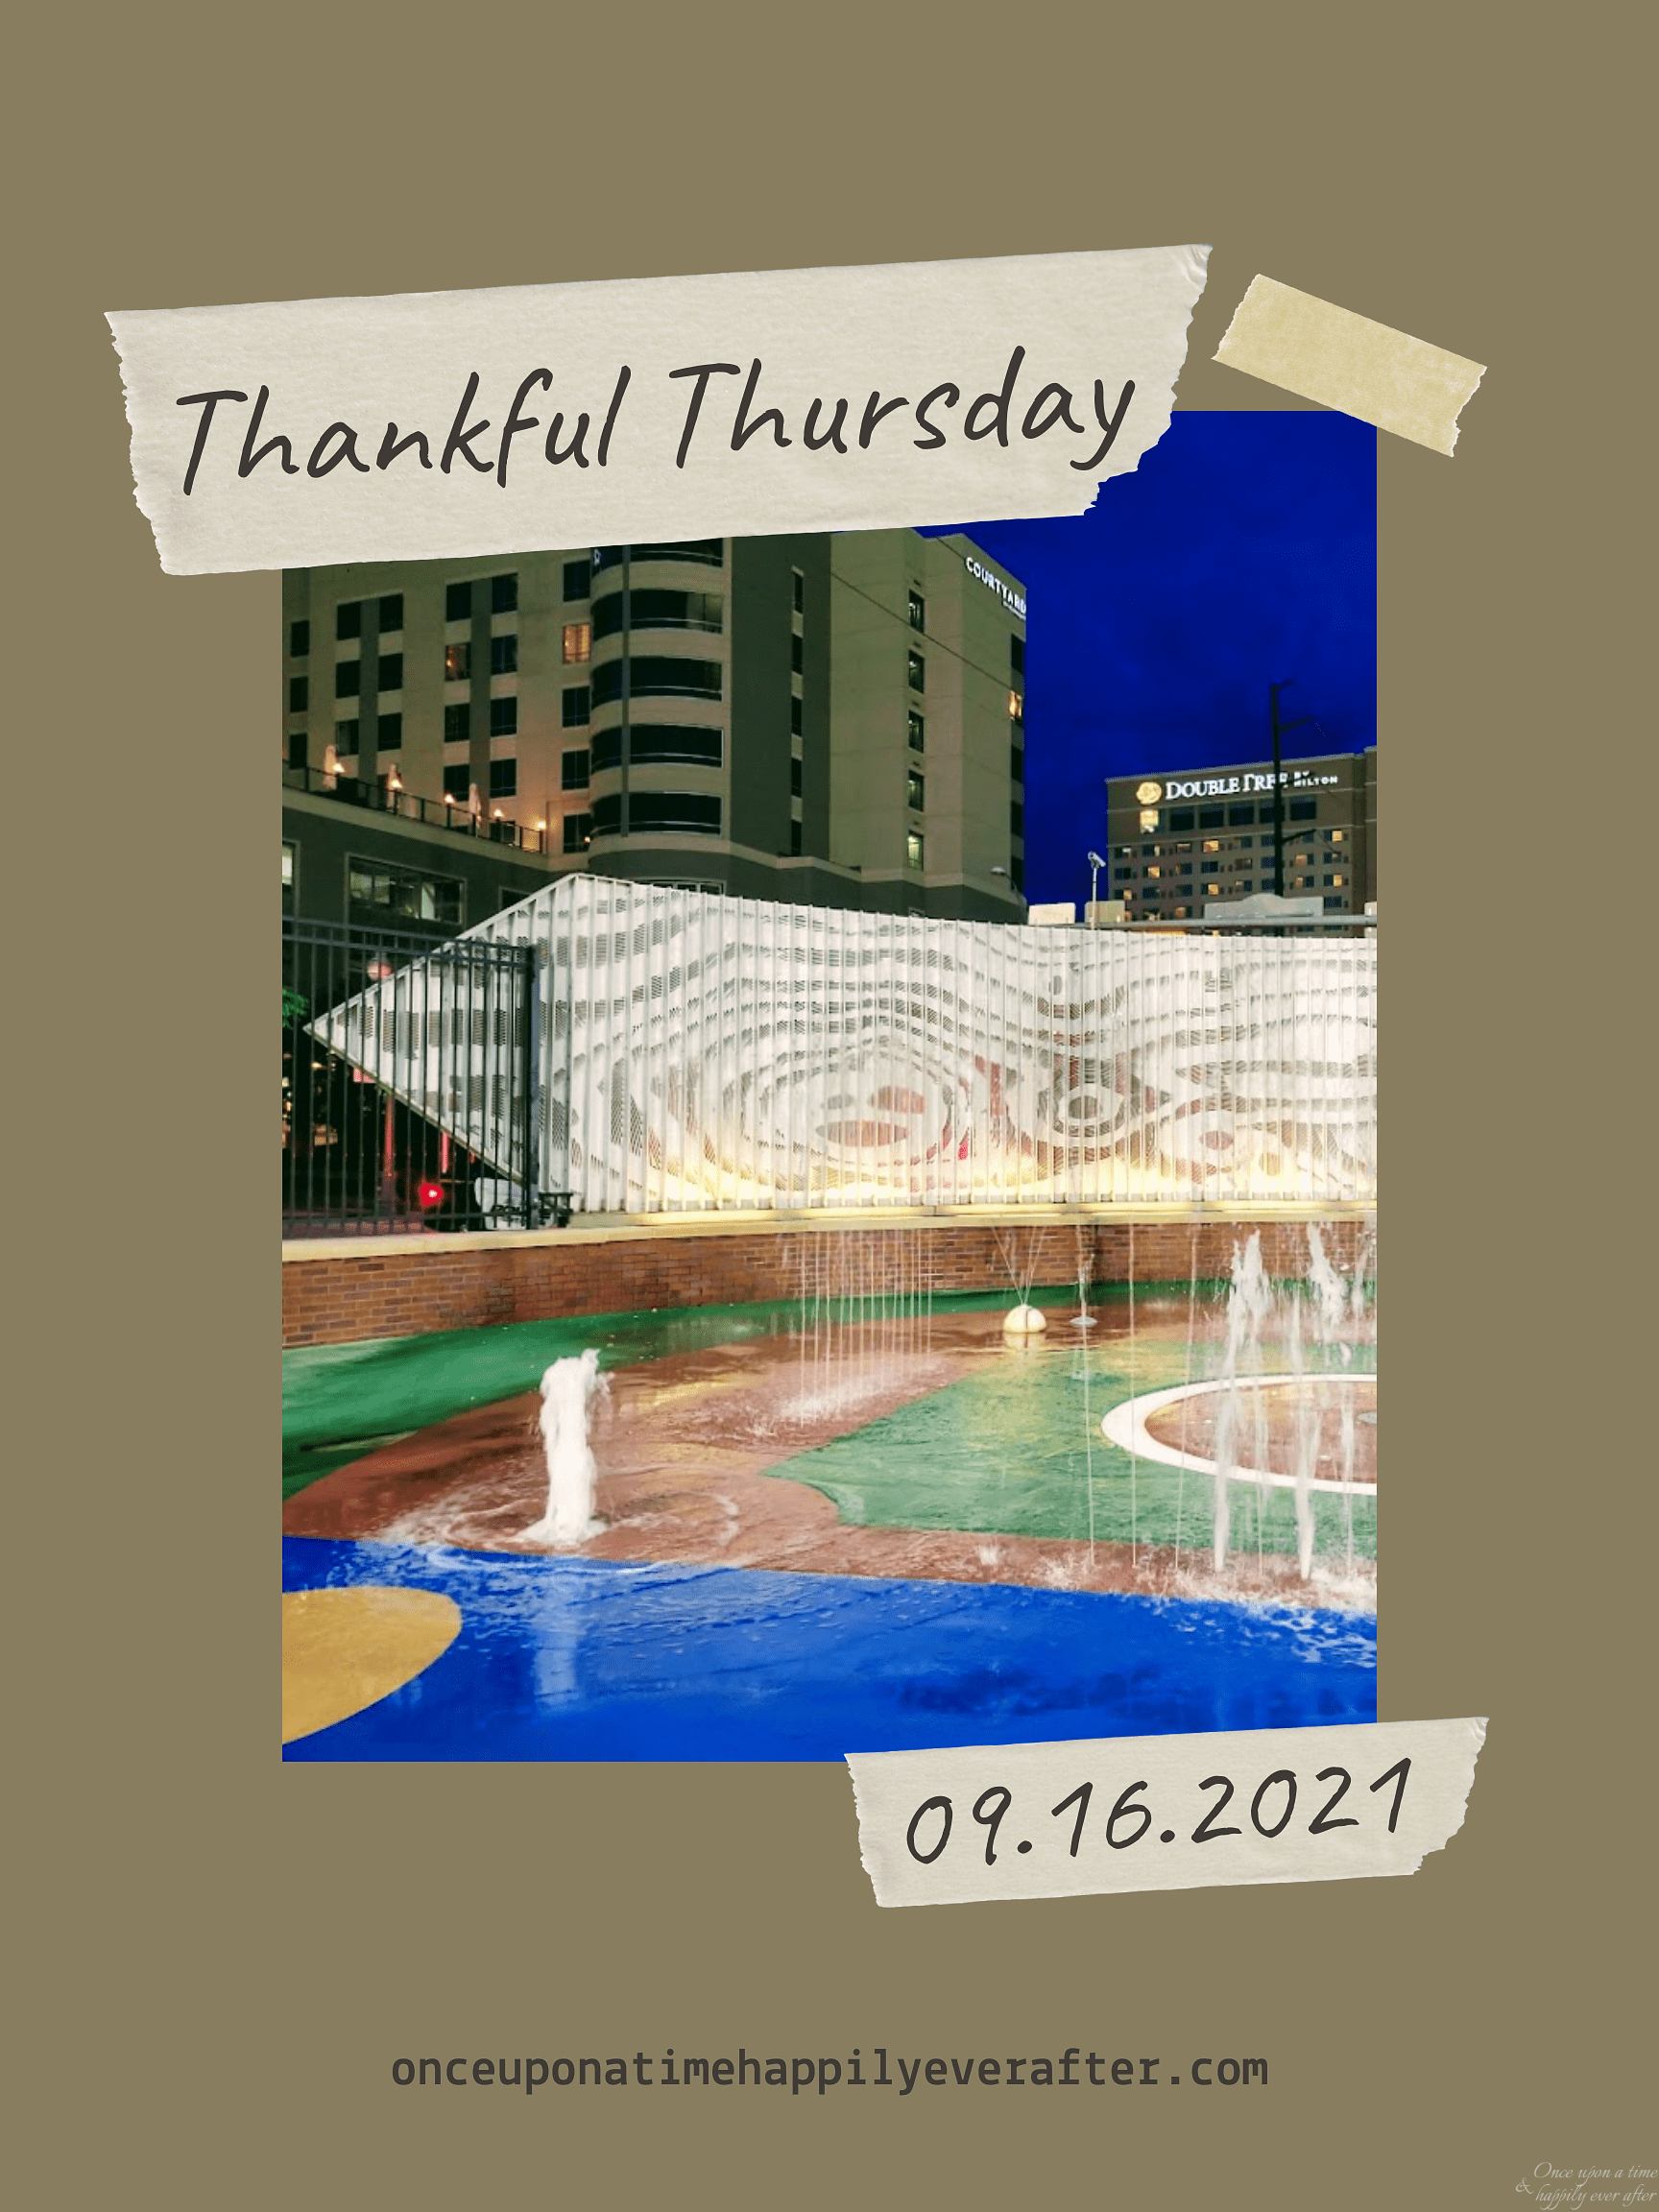 Thankful Thursday 09.16.2021